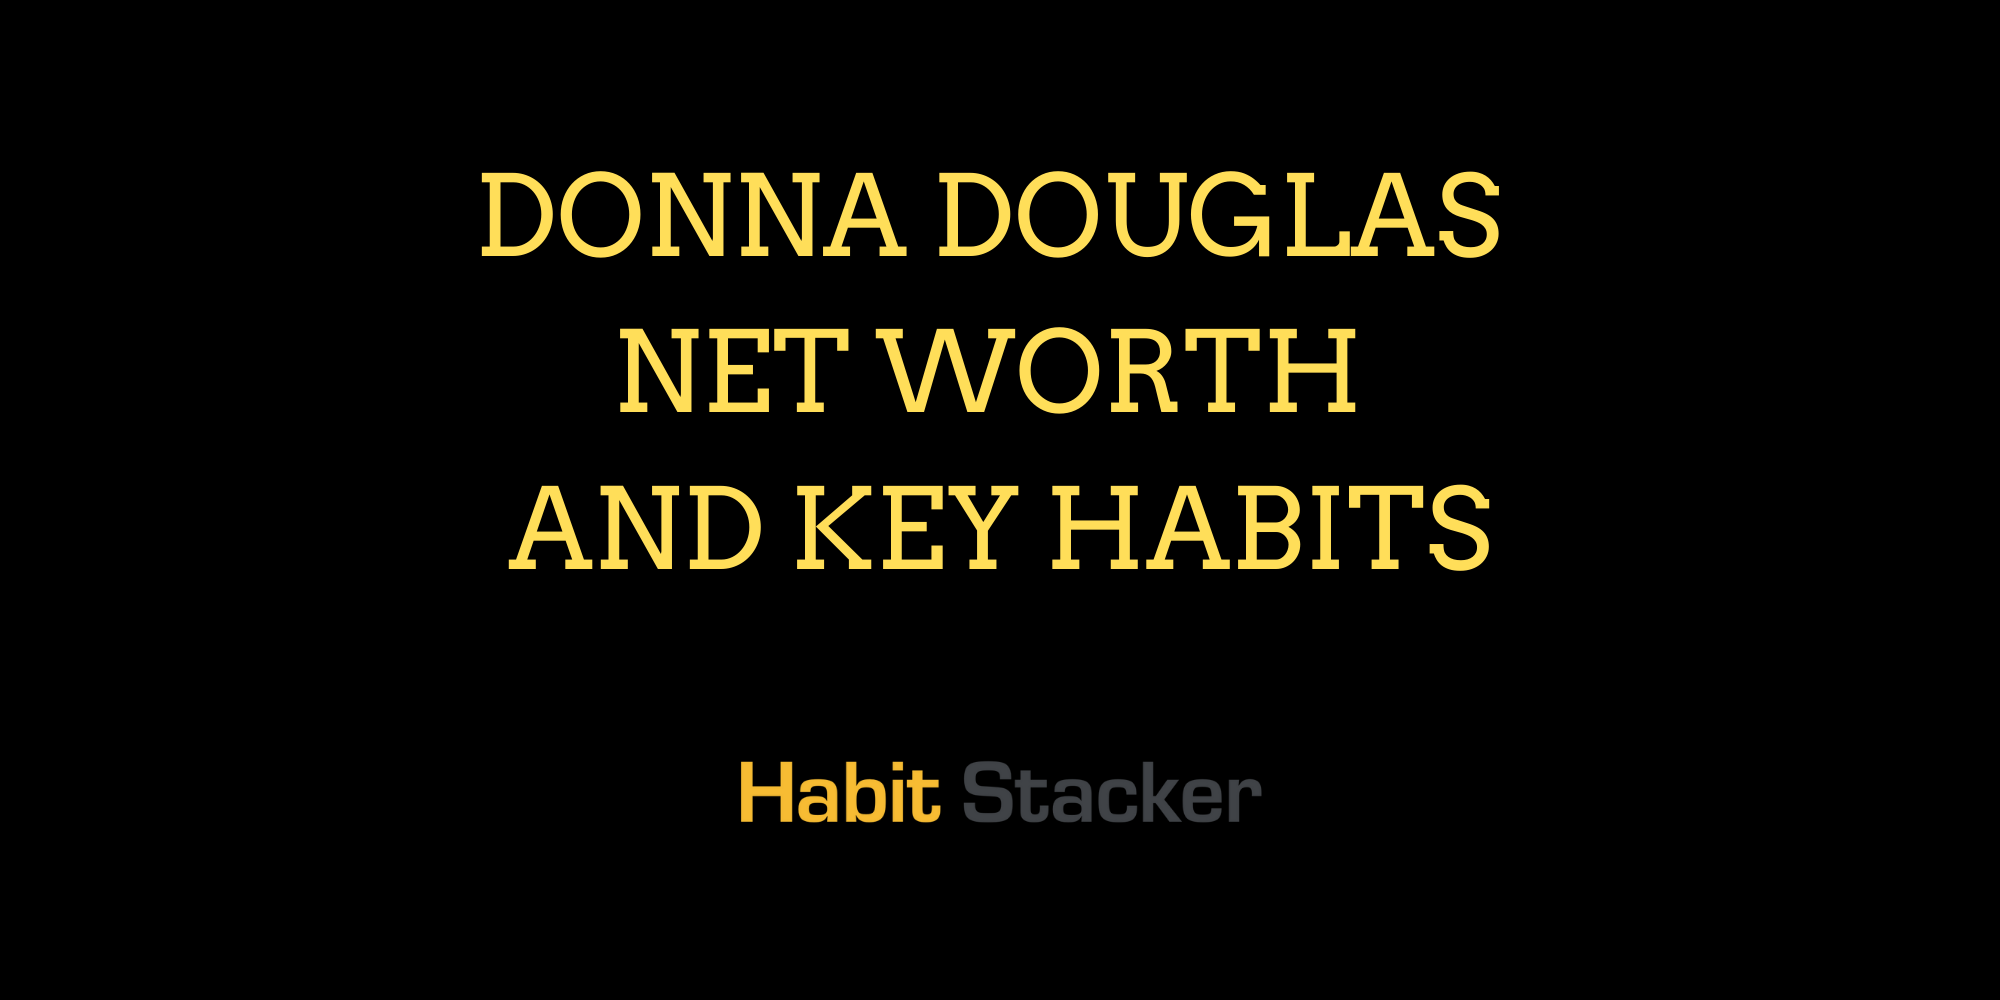 Donna Douglas Net Worth and Key Habits